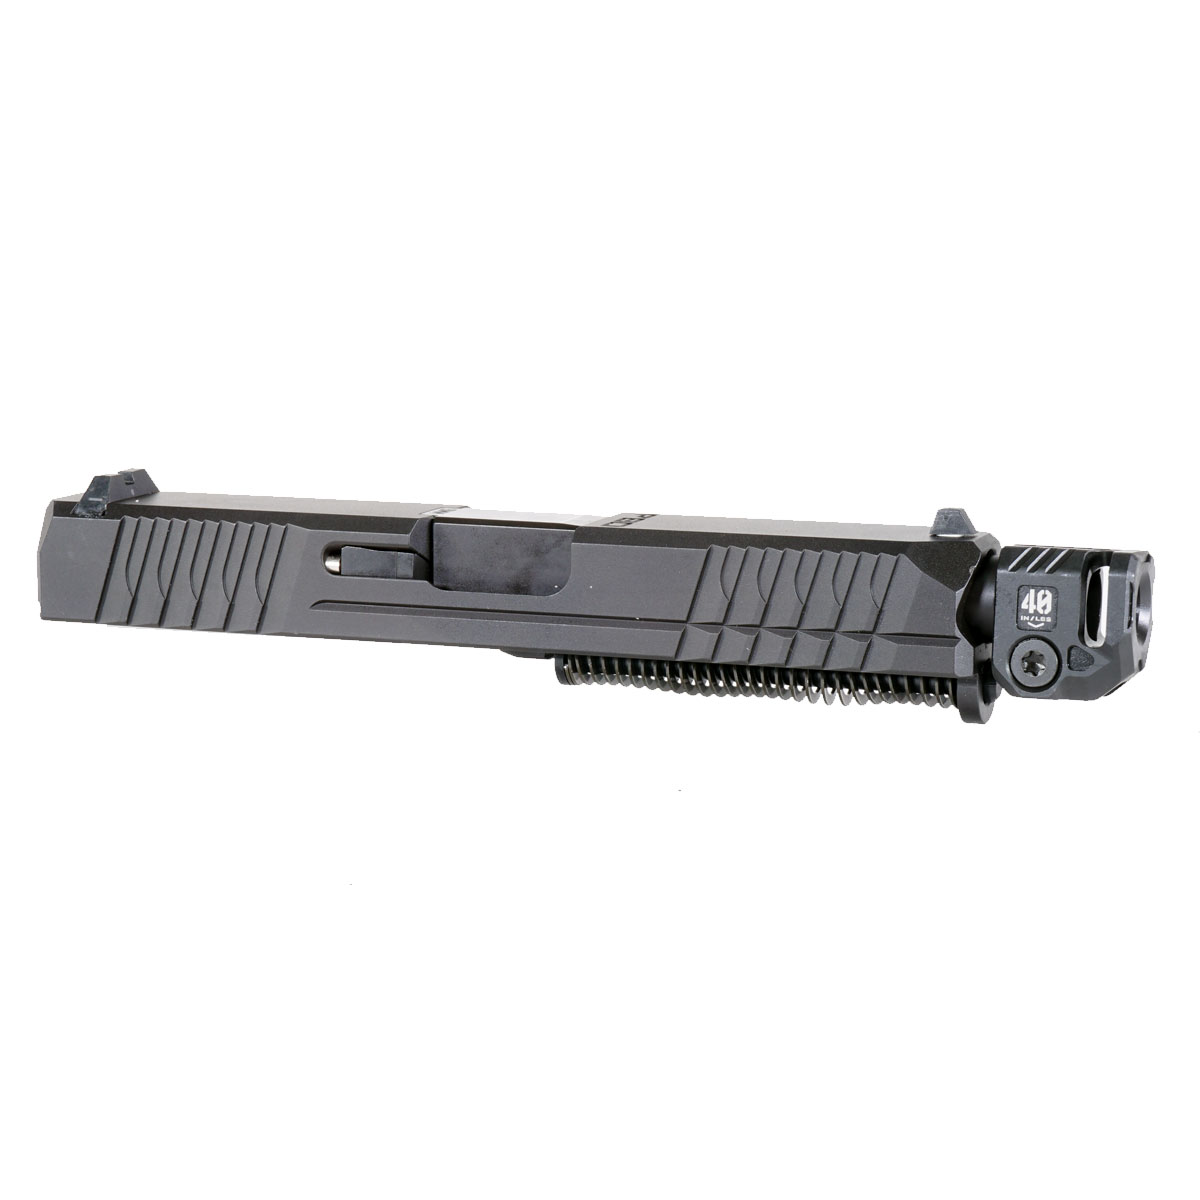 MMC 'Gunslinger's Gamble' 9mm Complete Slide Kit - Glock 19 Gen 1-3 Compatible